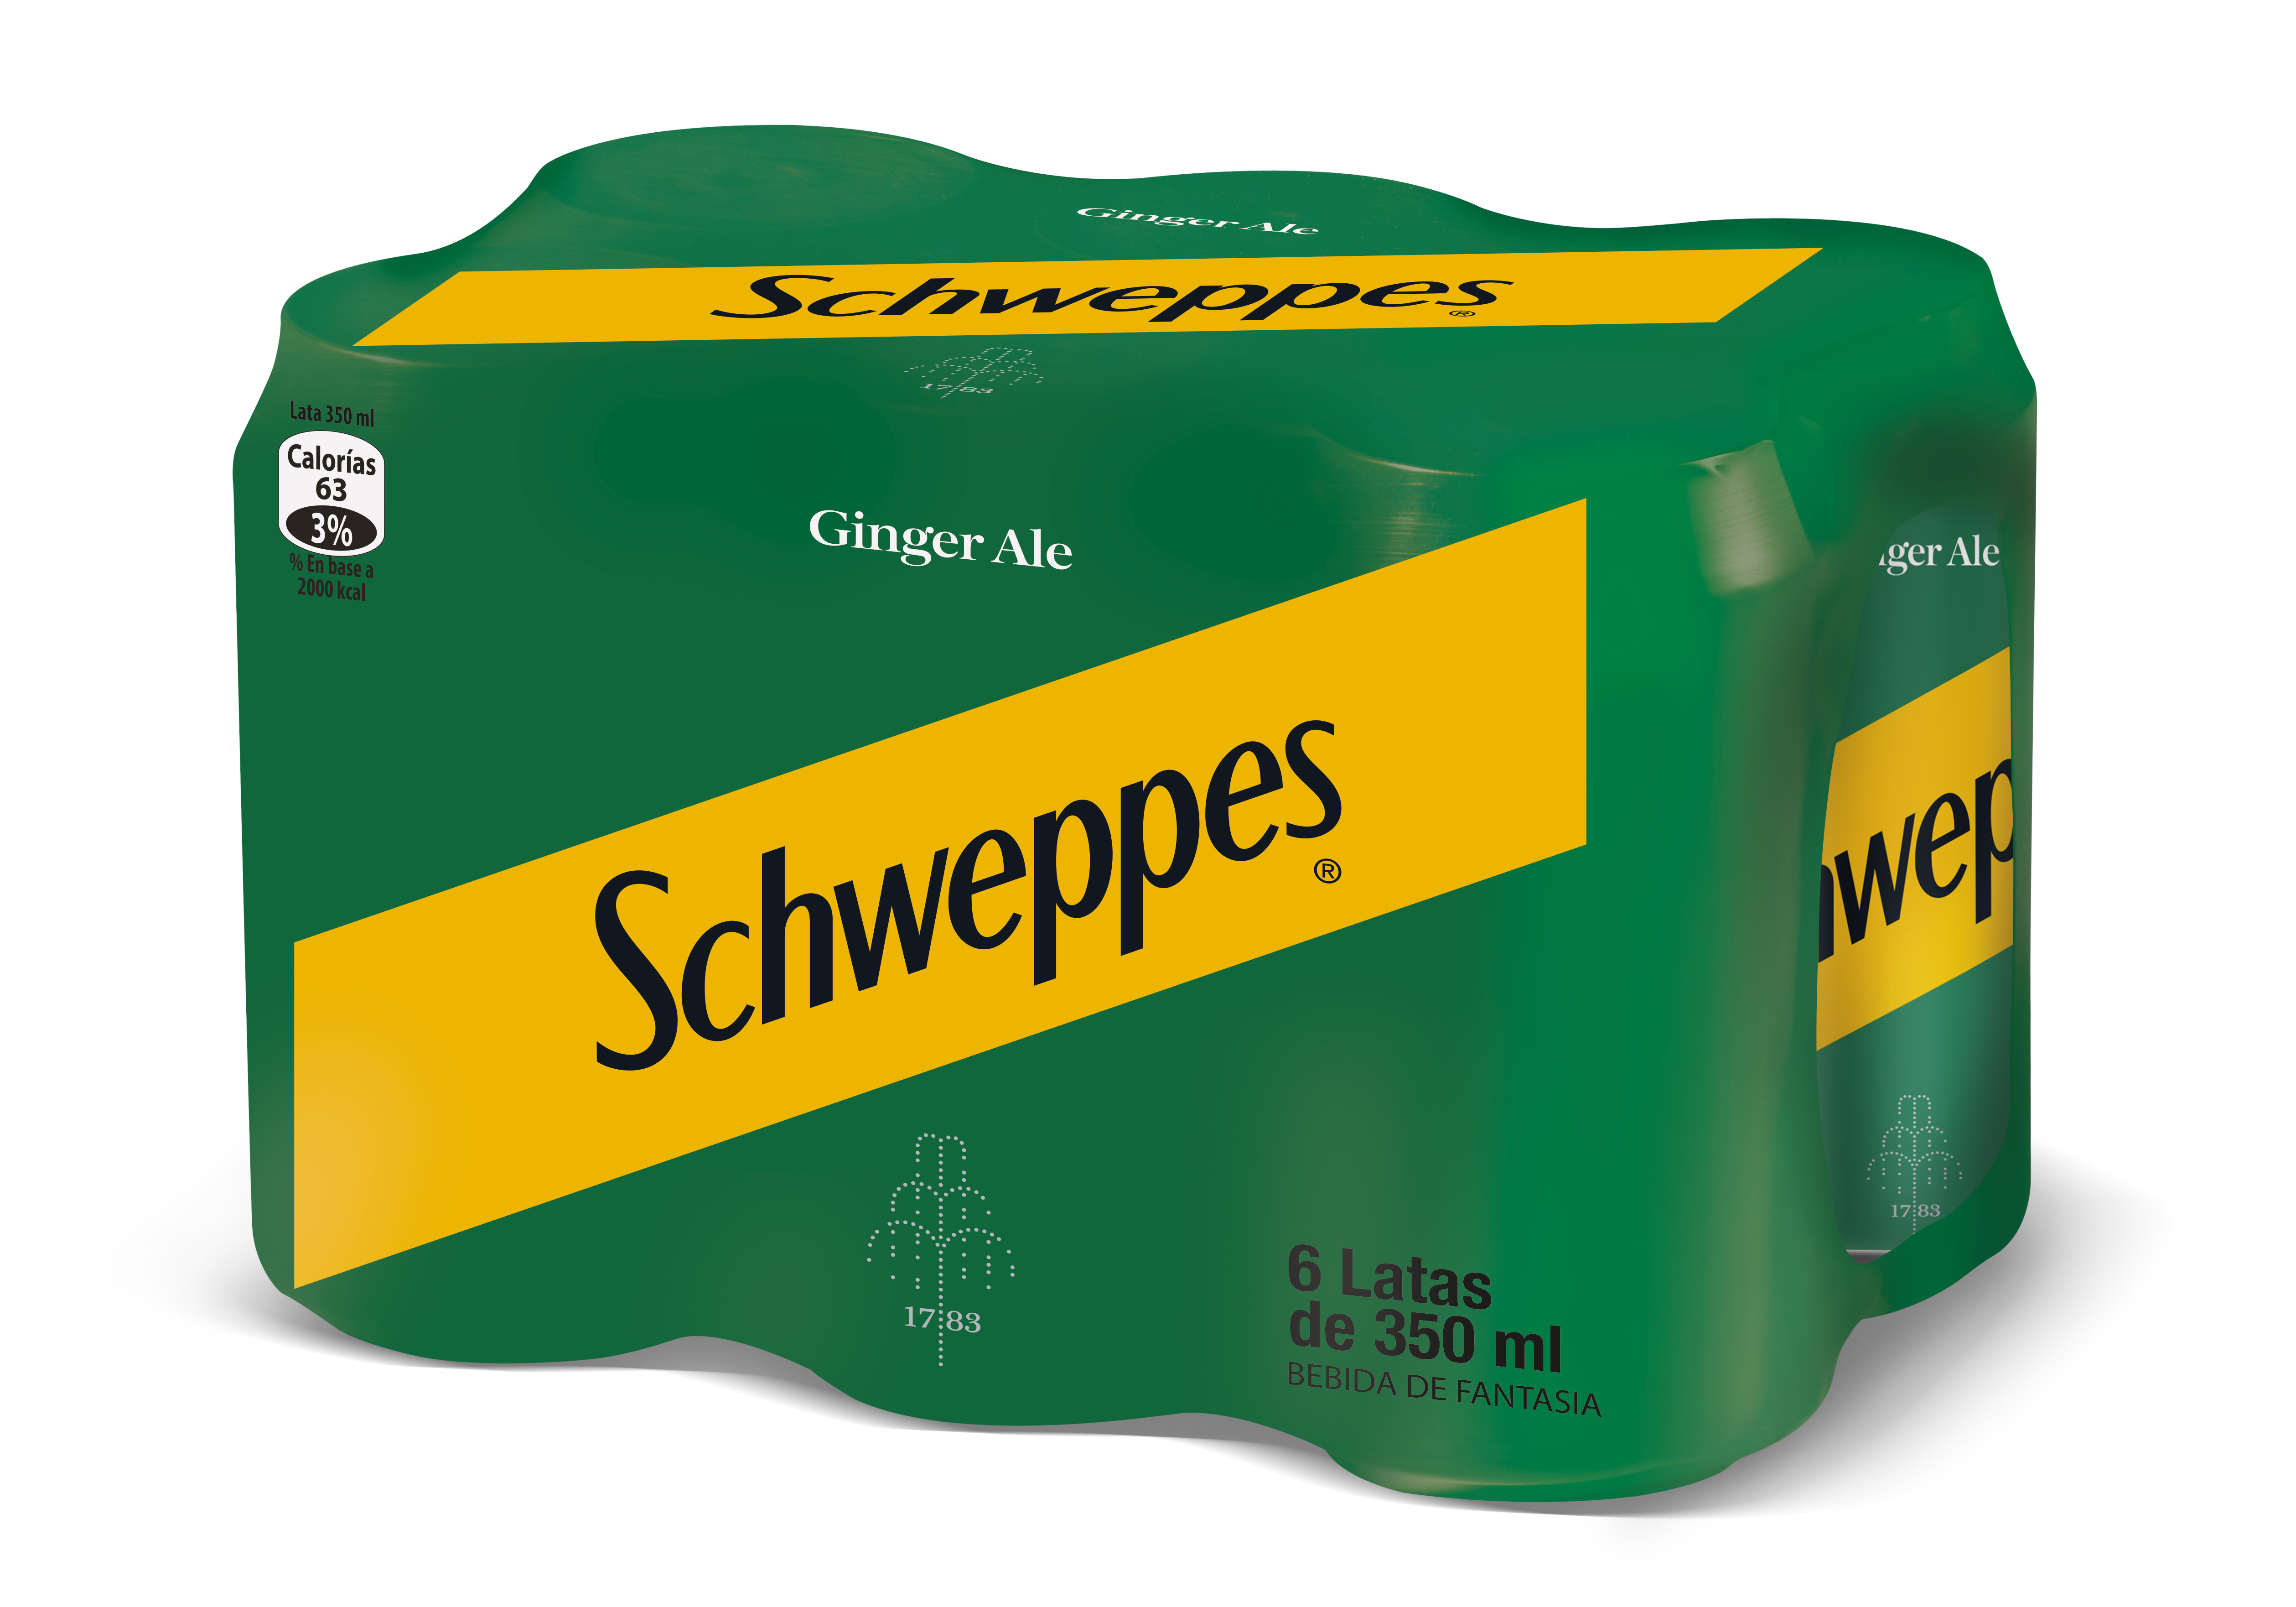 Sixpack de Schweppes Ginger Ale